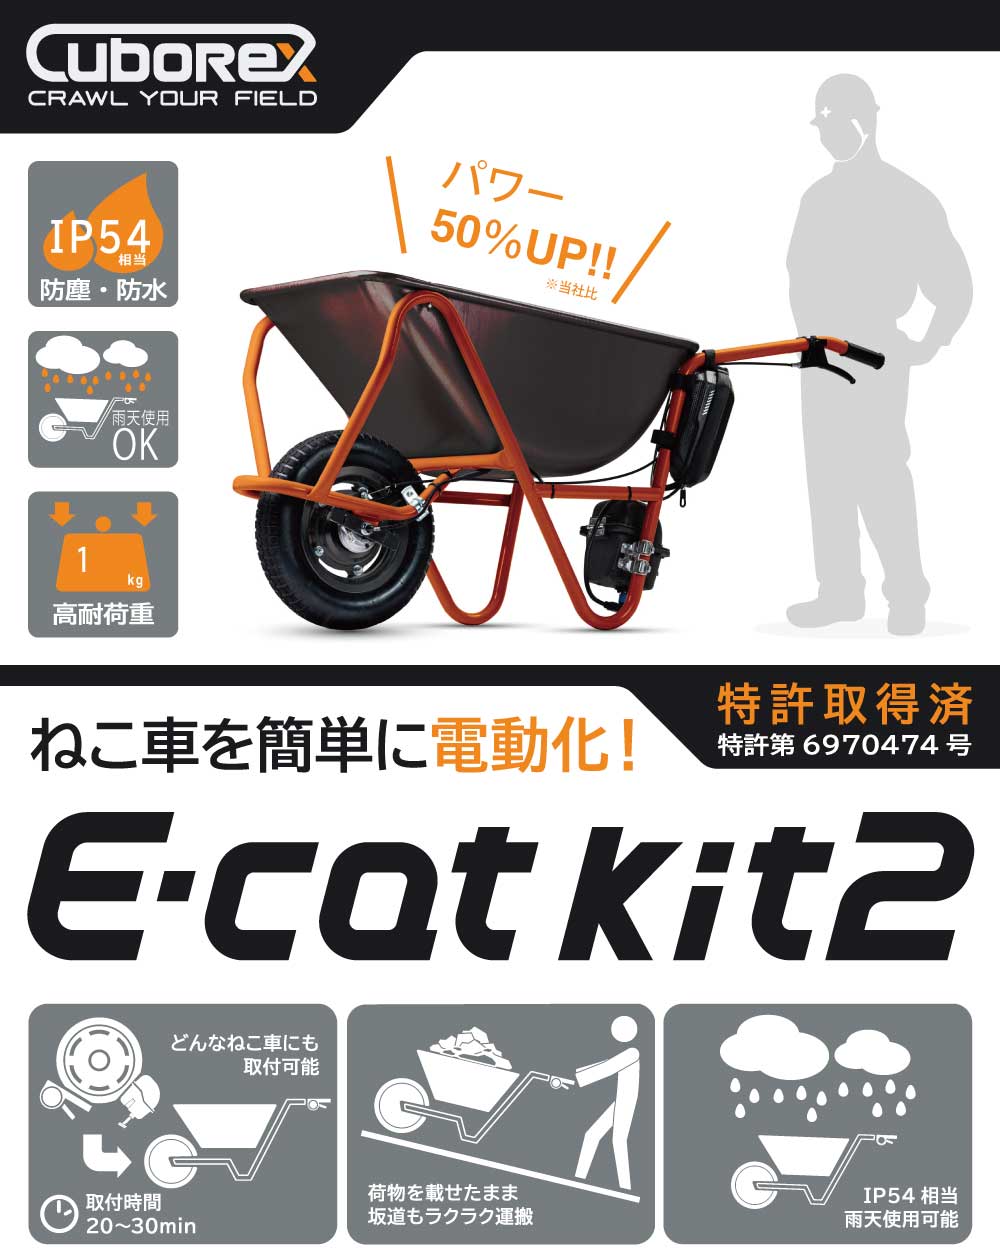 CuboRex 電動一輪車 E-cat kit2 ＋ 金象印一輪車パッケージ ＜キューボ